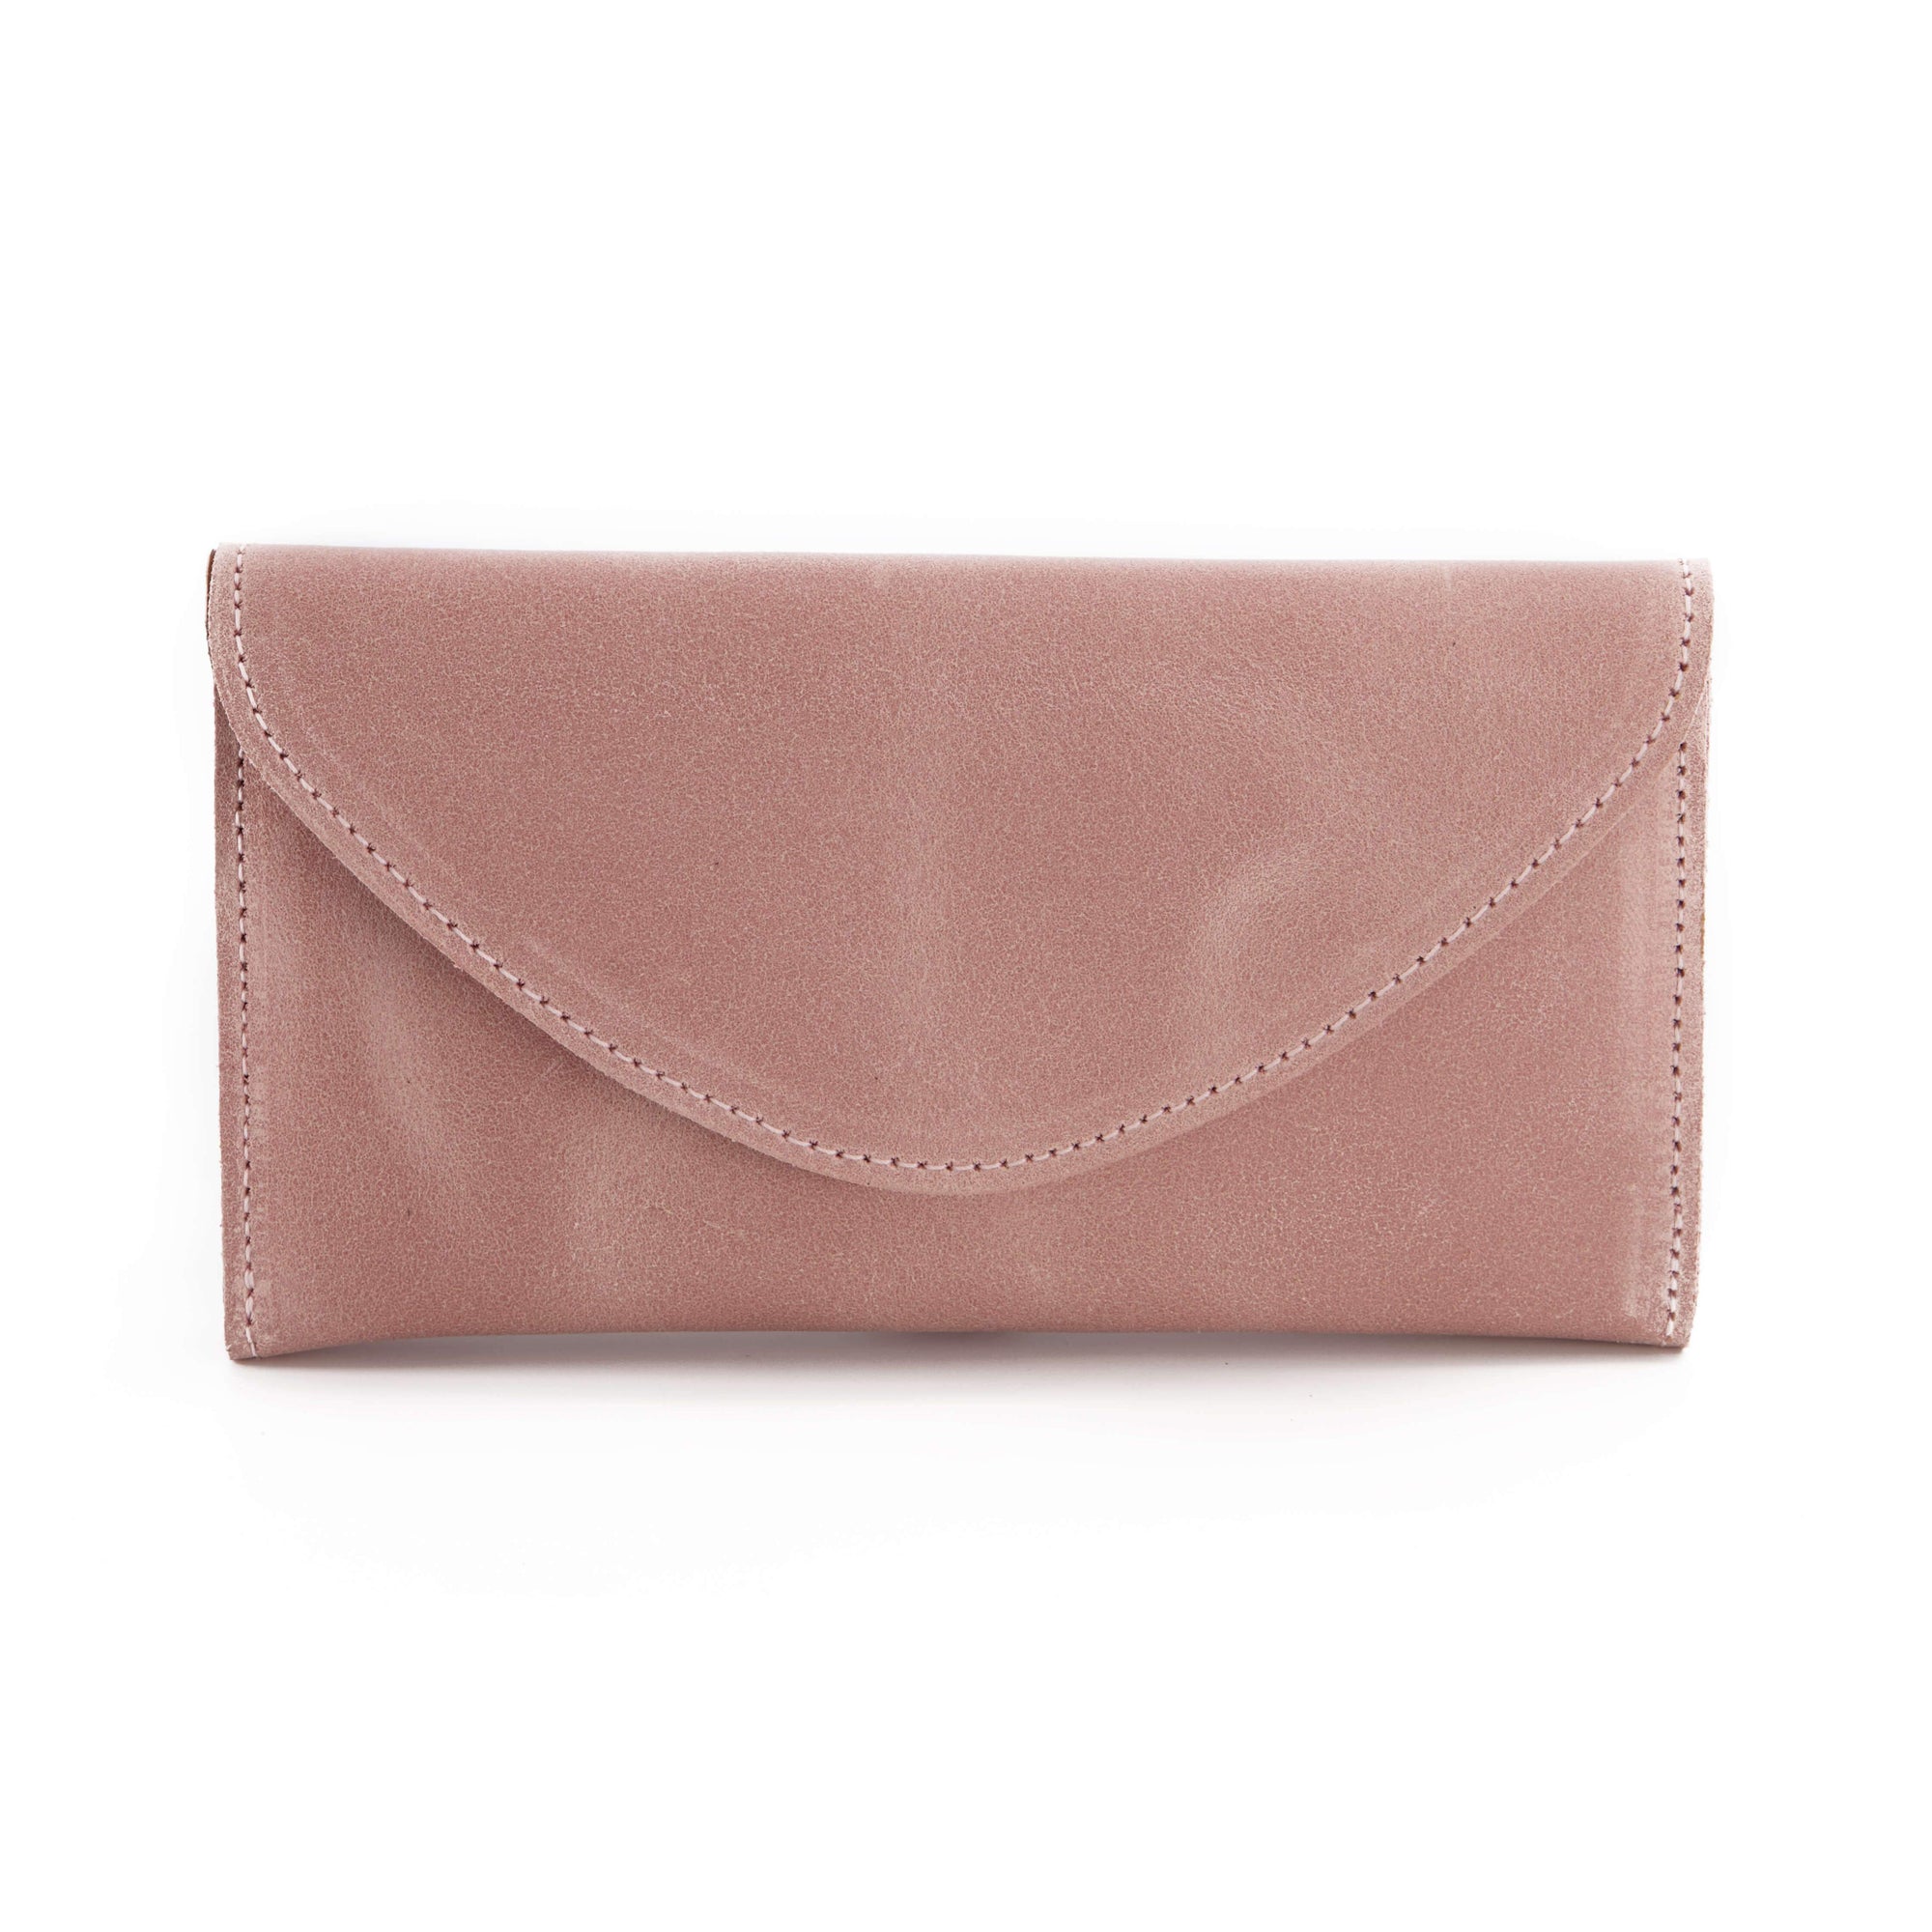 pink leather wallet, women wallet, big wallet, leather wallet women, handmade wallet, leather cards holder wallet, handmade leather wallet, gift for her